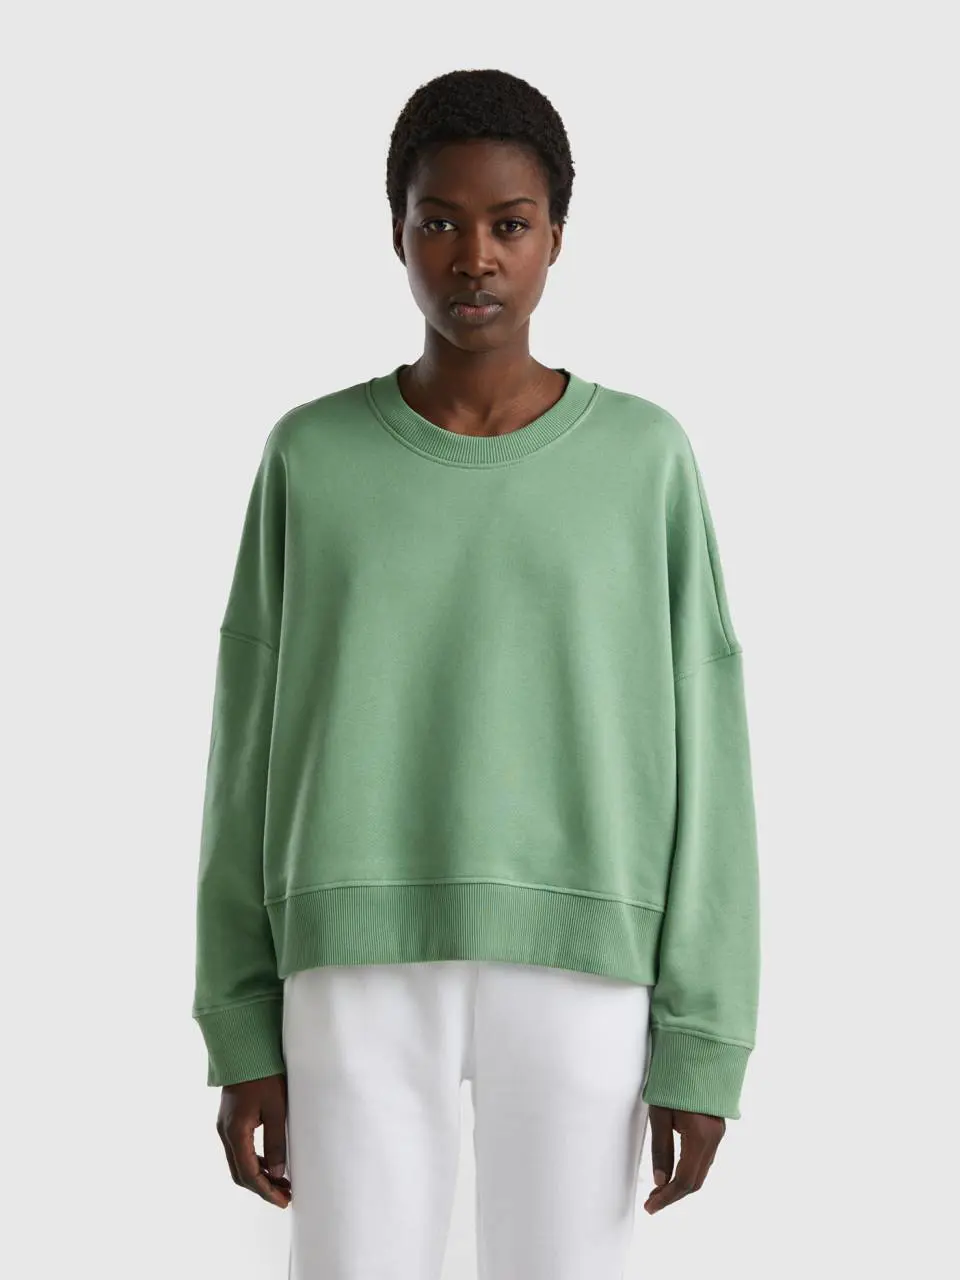 Benetton boxy fit 100% cotton sweatshirt. 1